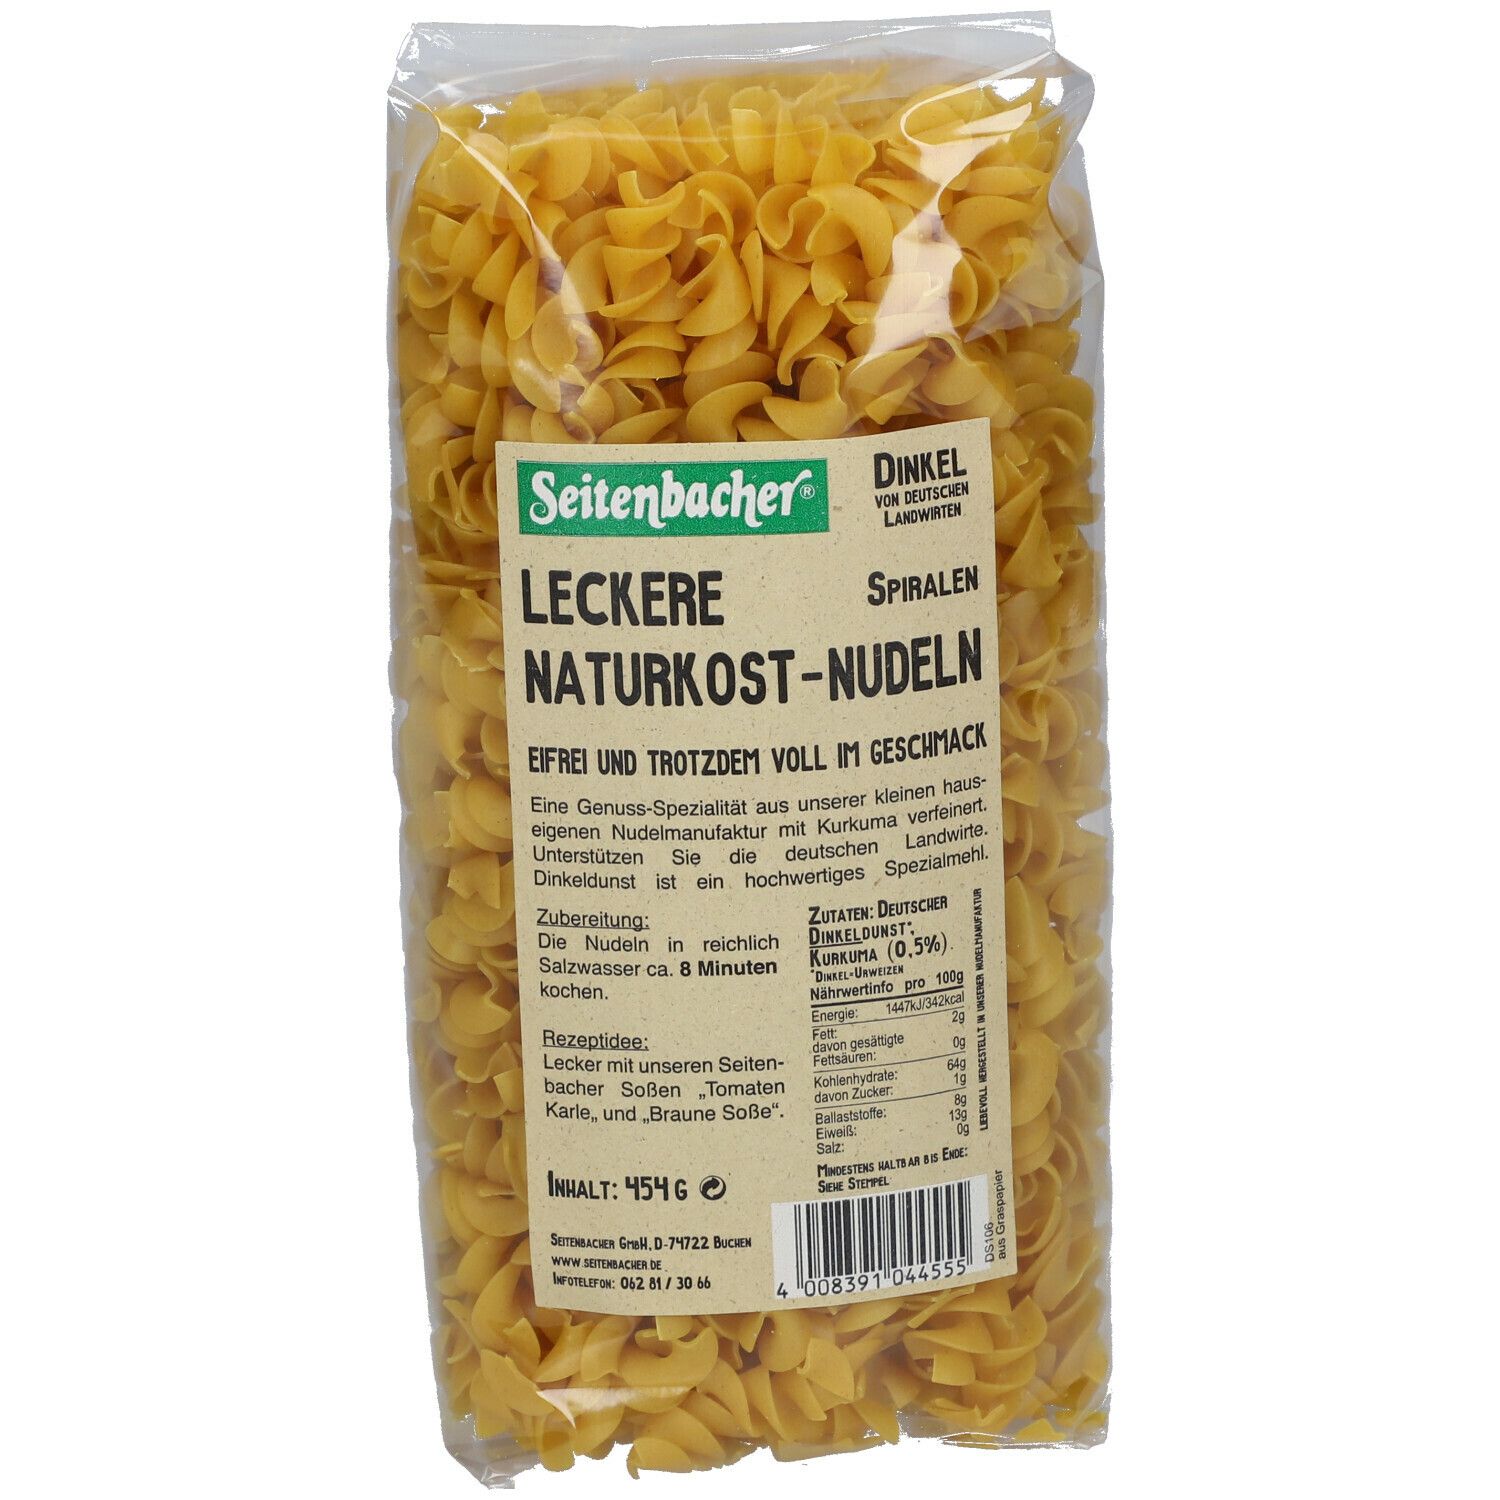 Seitenbacher® Leckere Naturkost-Nudeln Spiralen